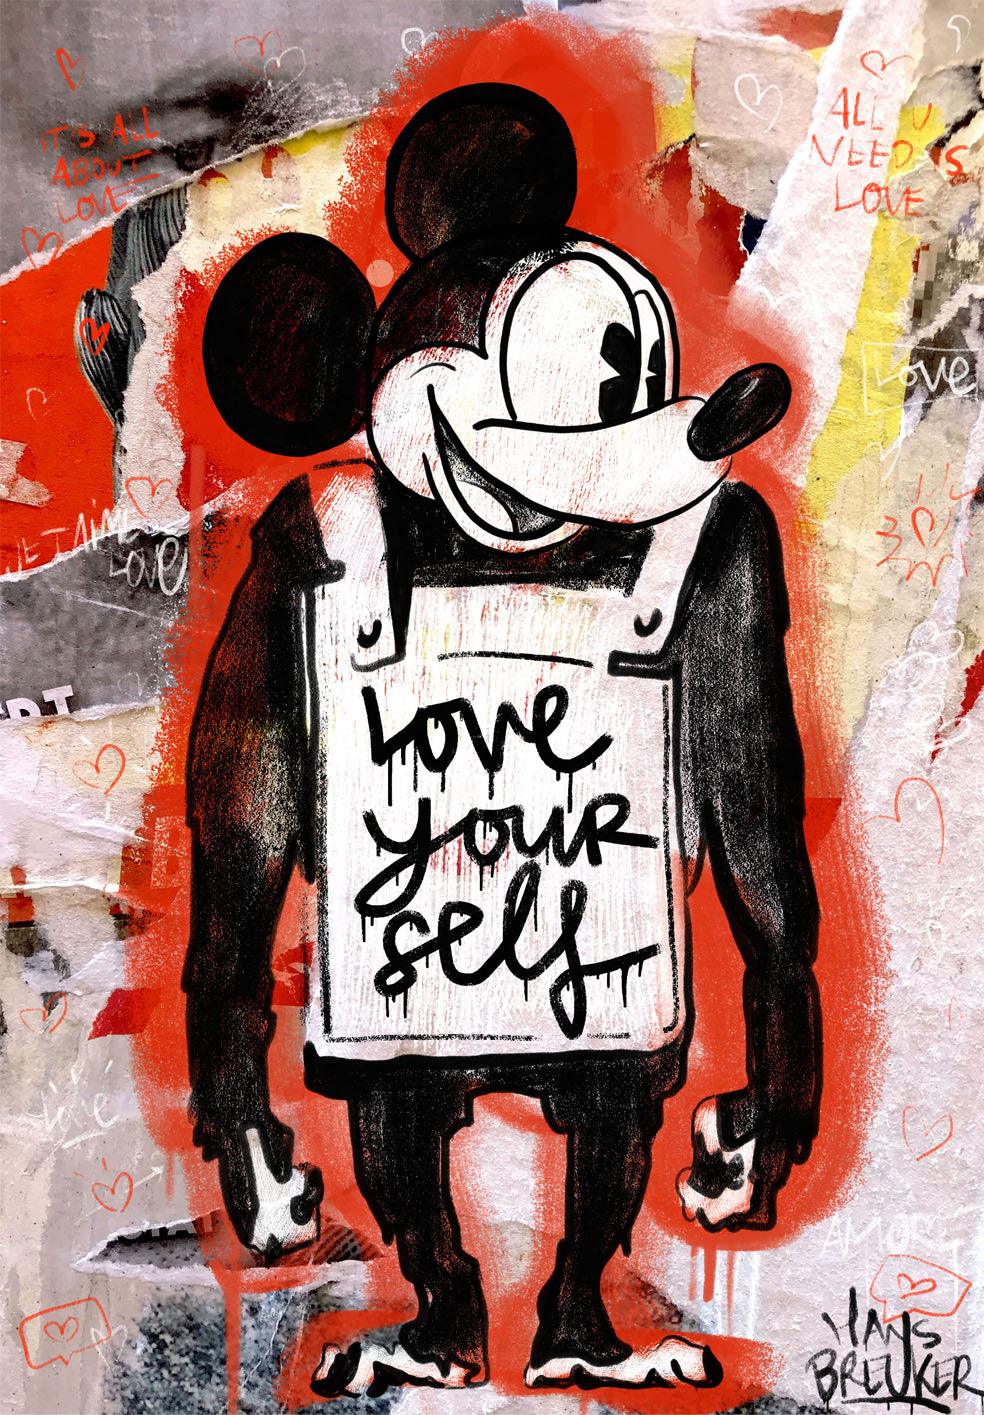 Love yourself - Hans Breuker